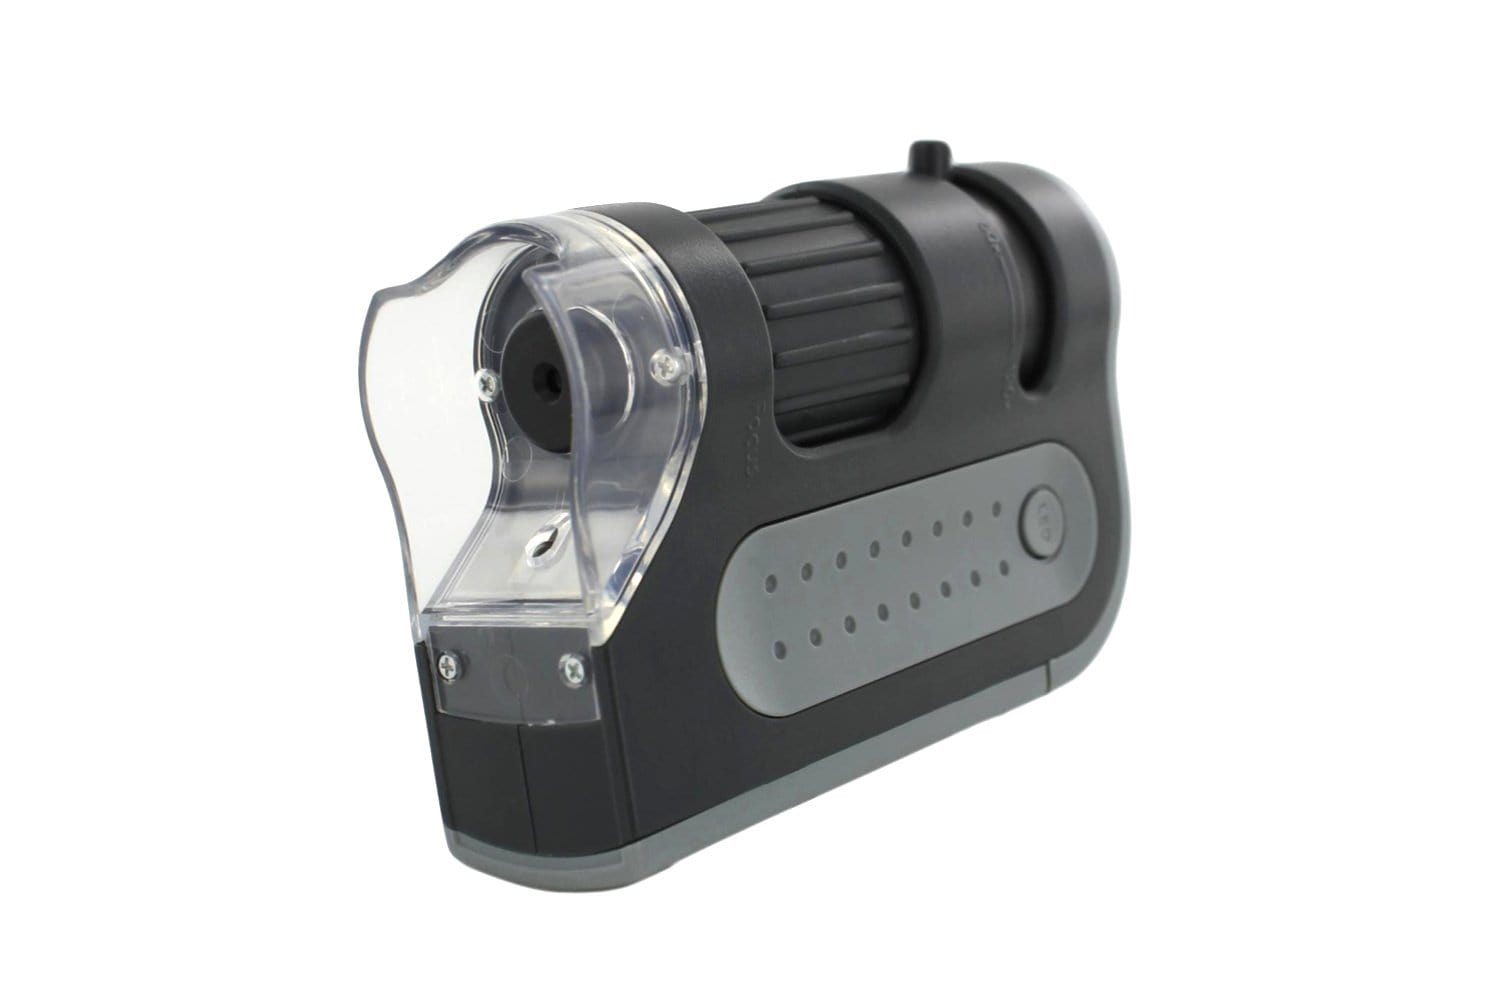 LED Lighted Pocket Microscope, 60-120x